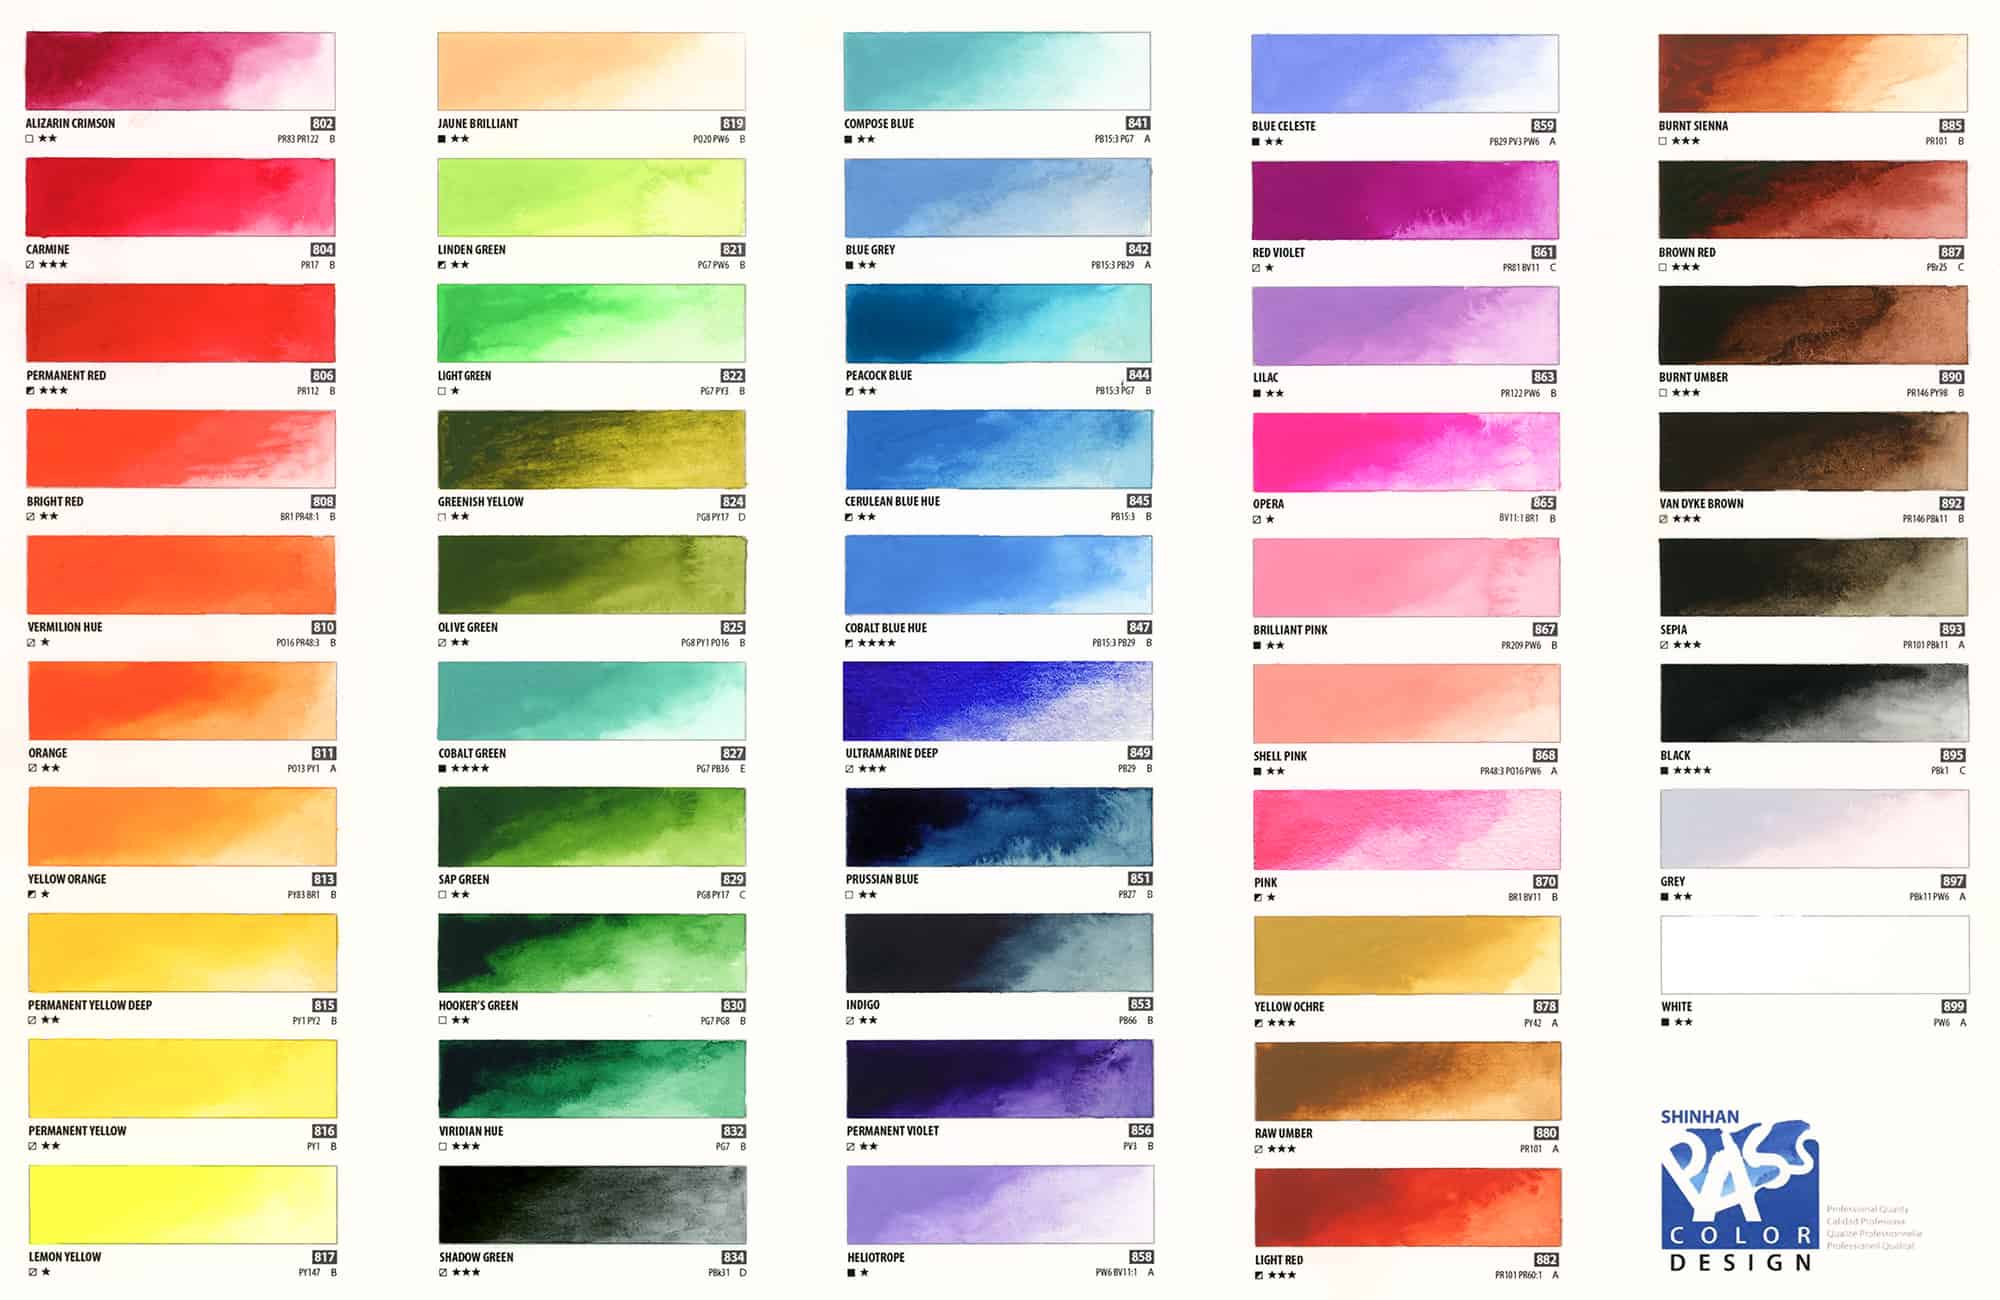 12 24 or 48 Colours SHINHAN ART Artists Soft Square Pastels Set